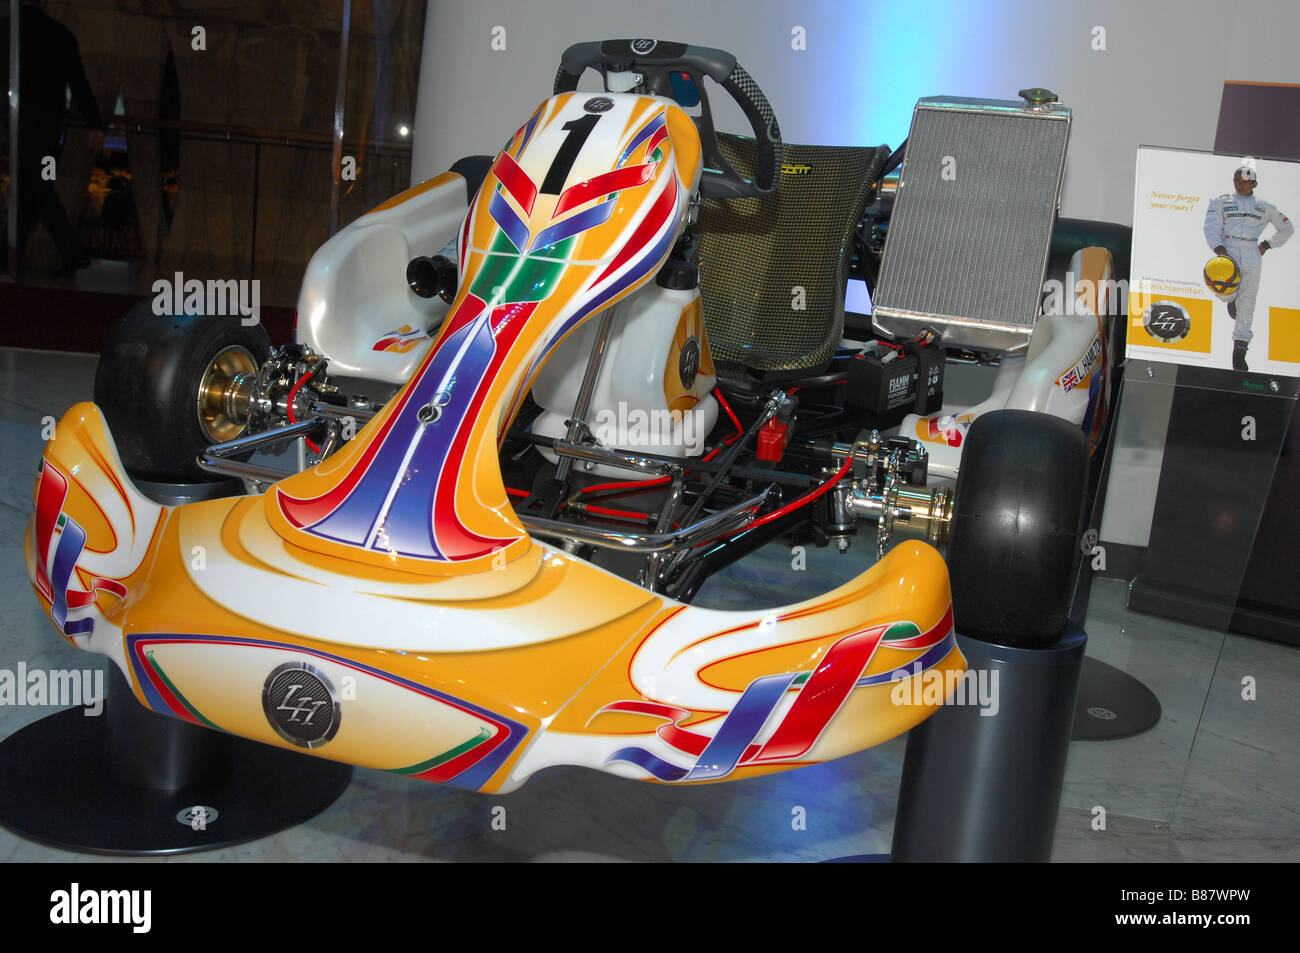 CIK FIA Karting Adwards, Hamilton LH Kart, Monaco Stock Photo